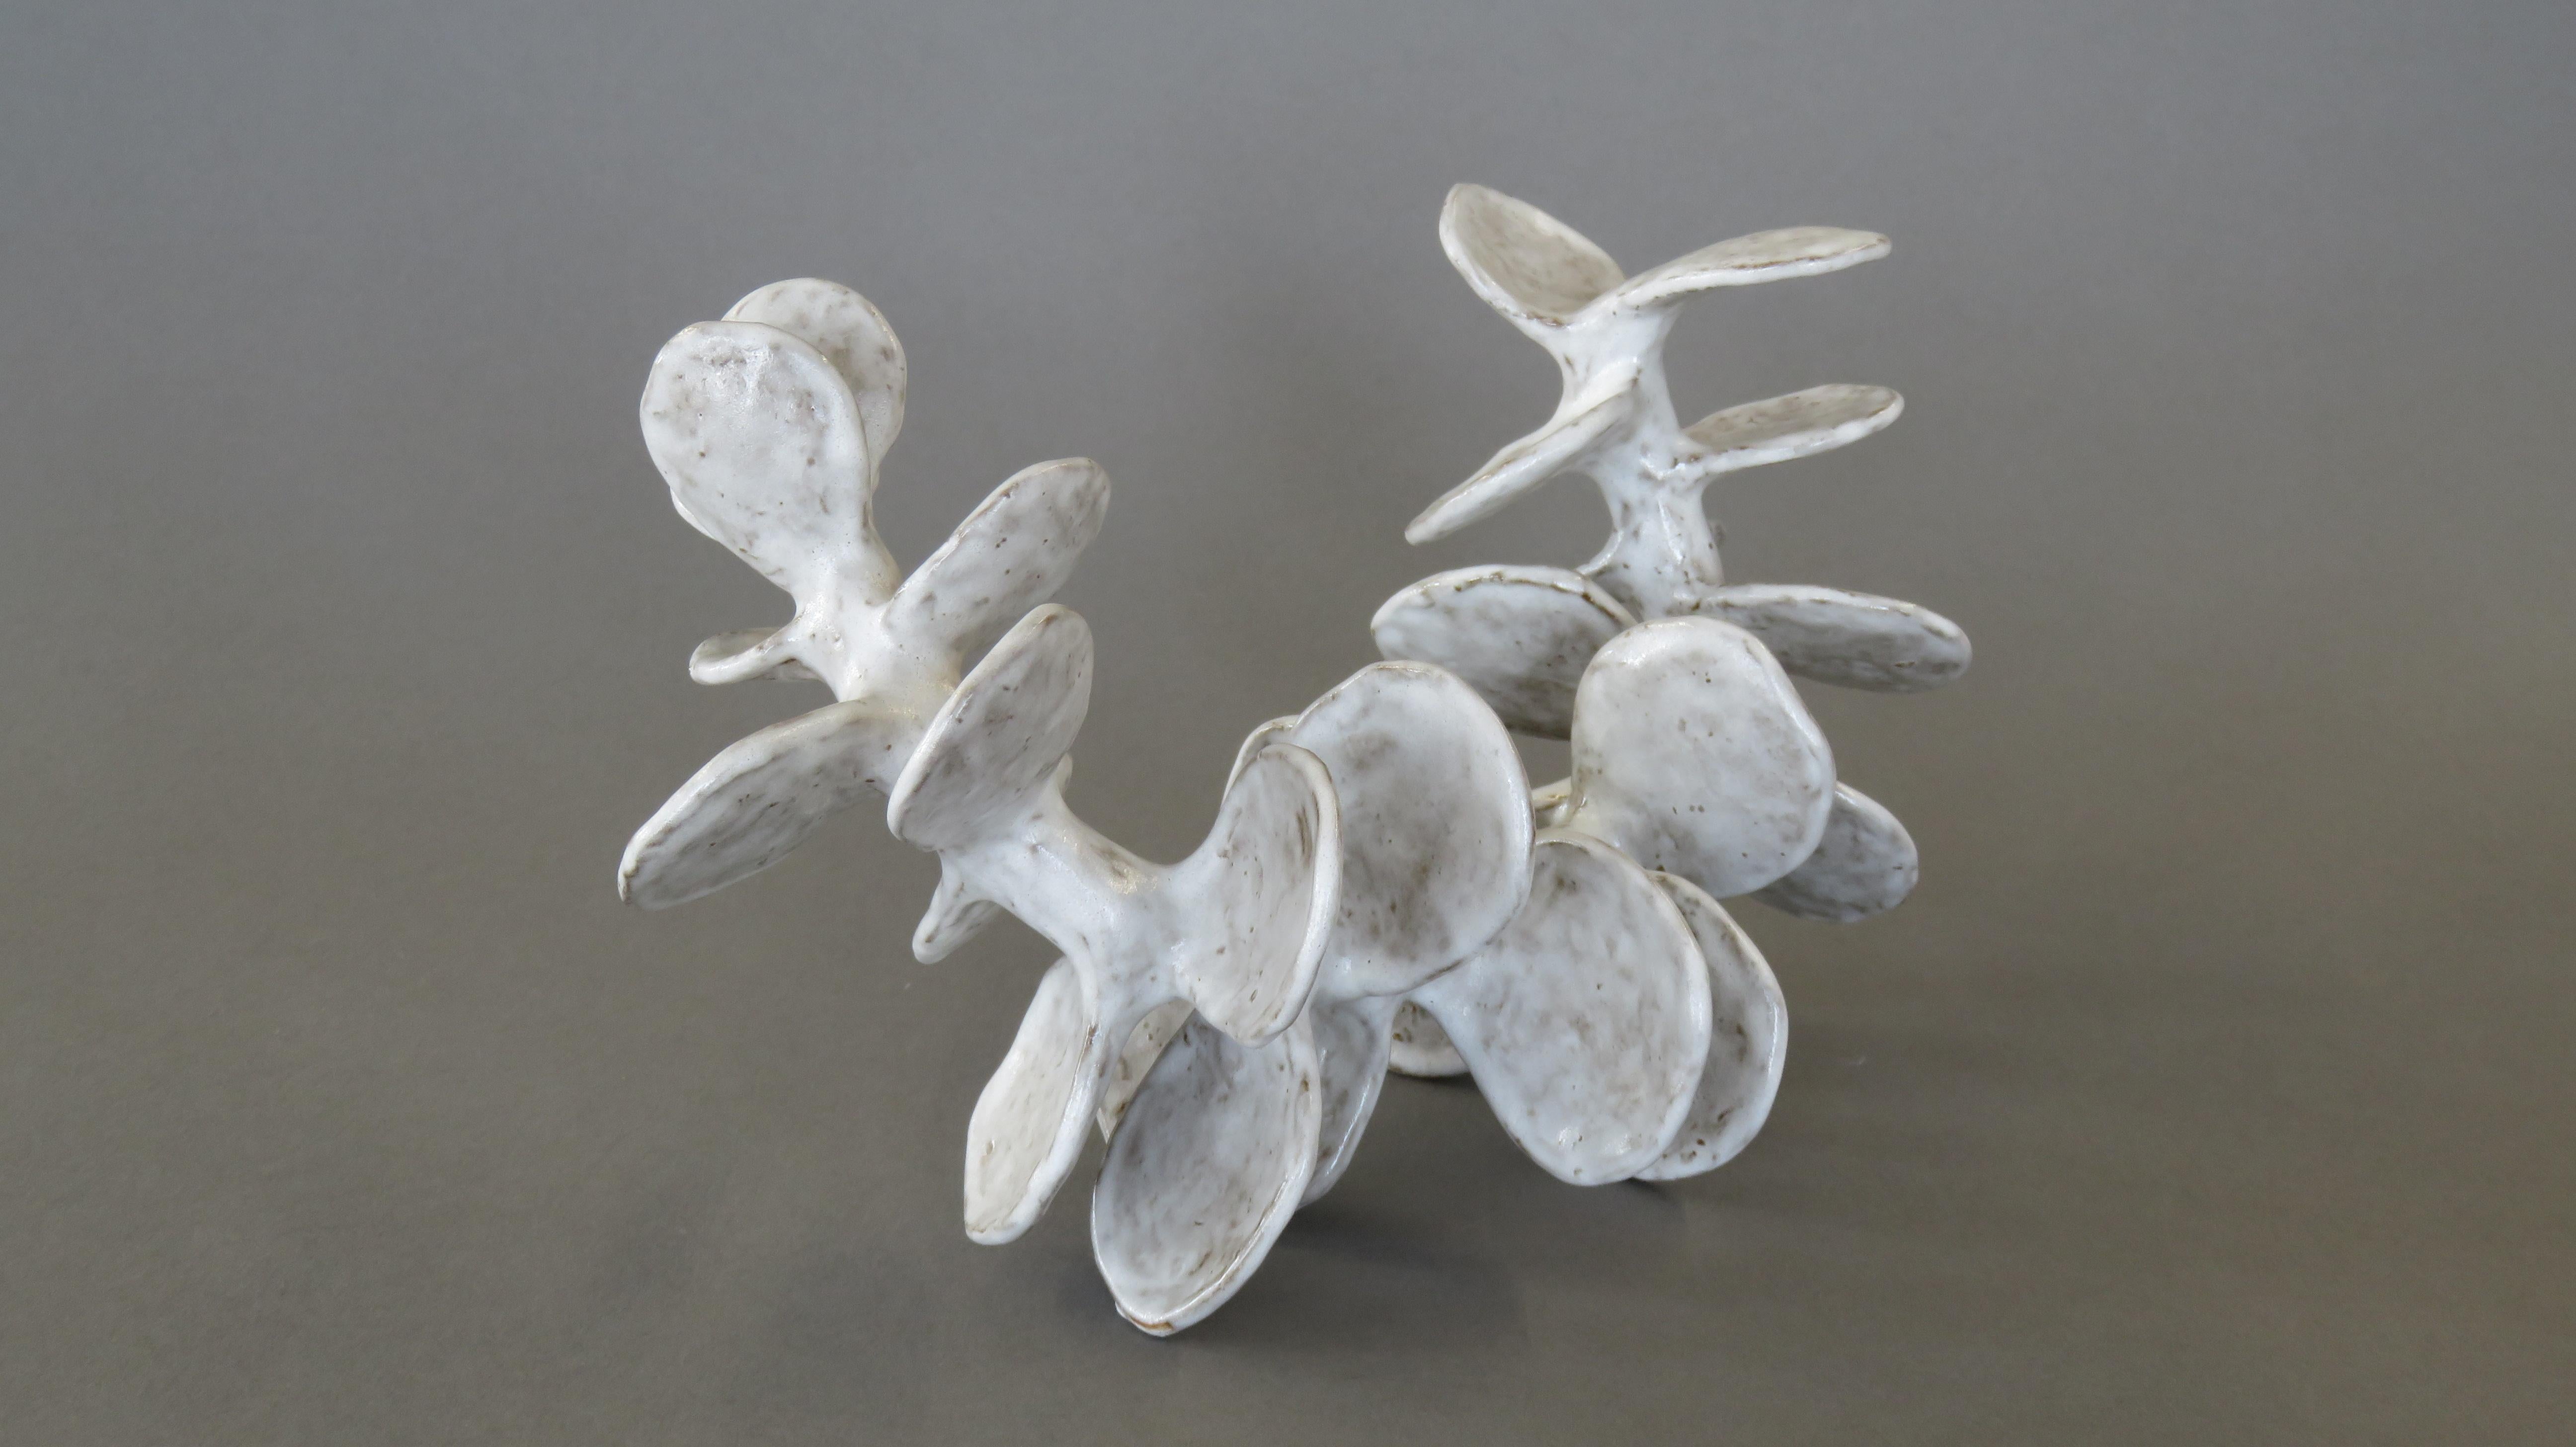 Hand-Crafted Handbuilt Ceramic Sculpture, Reclining Skeletal Spine in Mottled White